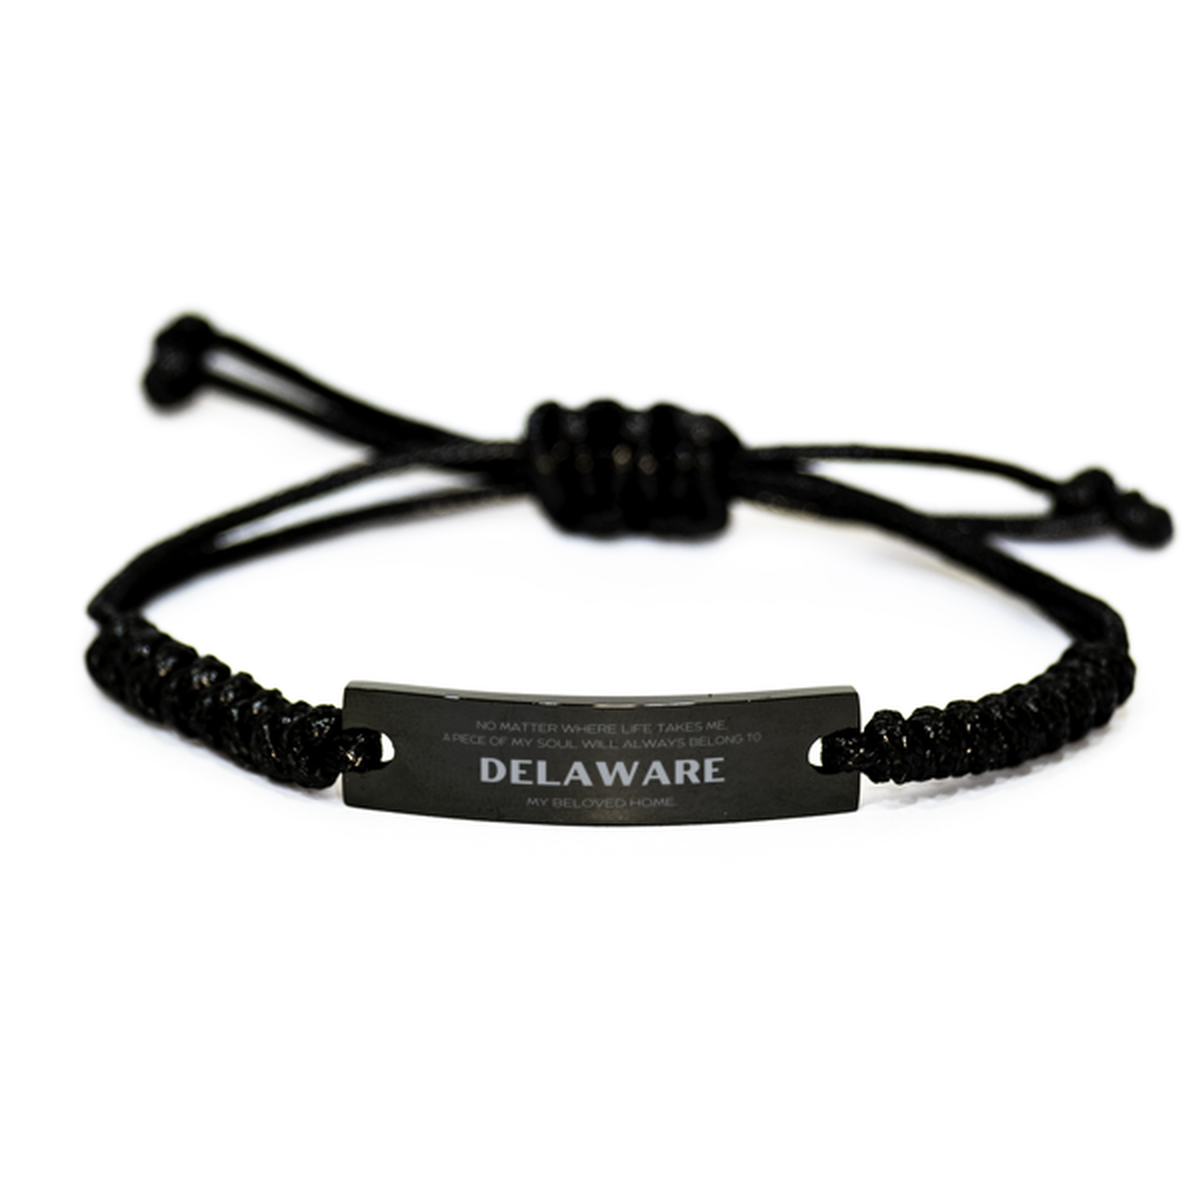 Love Delaware State Gifts, My soul will always belong to Delaware, Proud Black Rope Bracelet, Birthday Unique Gifts For Delaware Men, Women, Friends